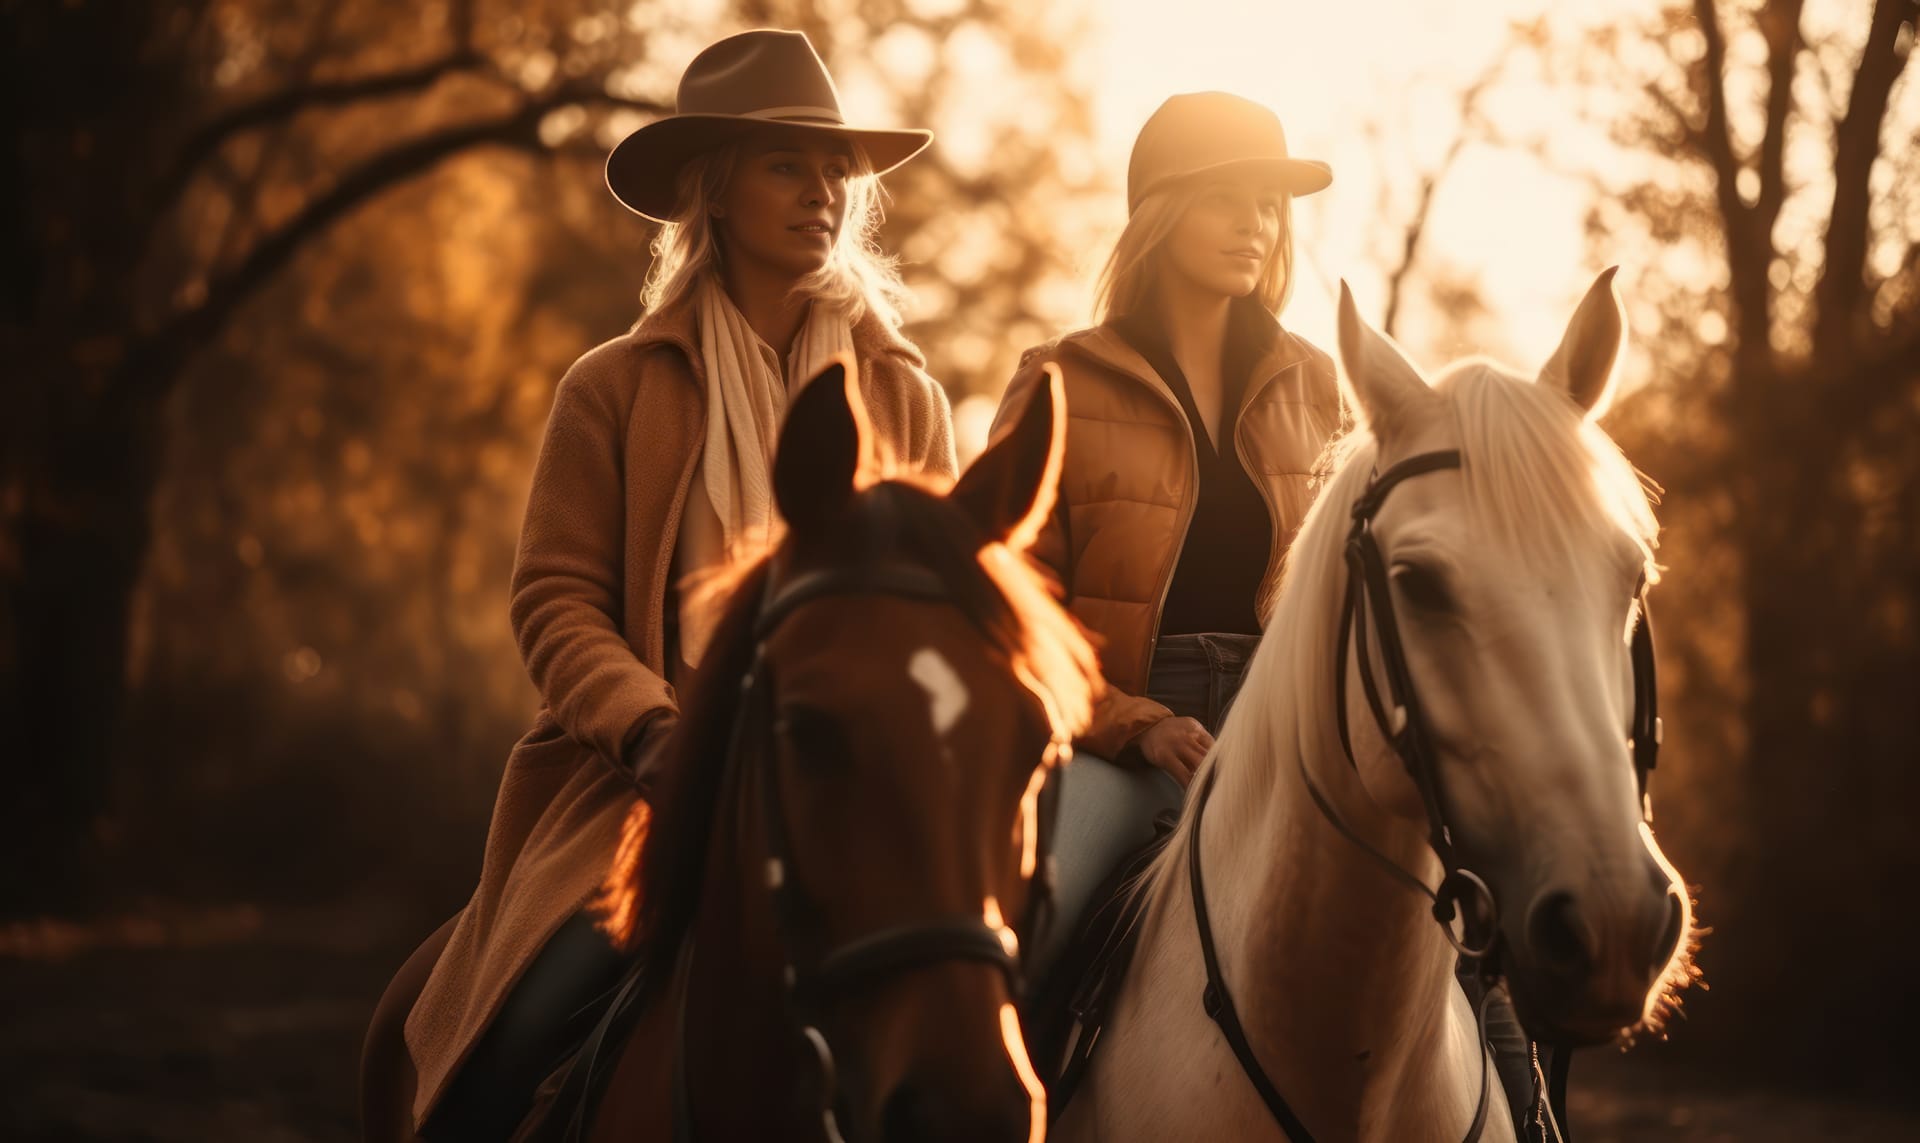 Two women riding horses sunset image of horse